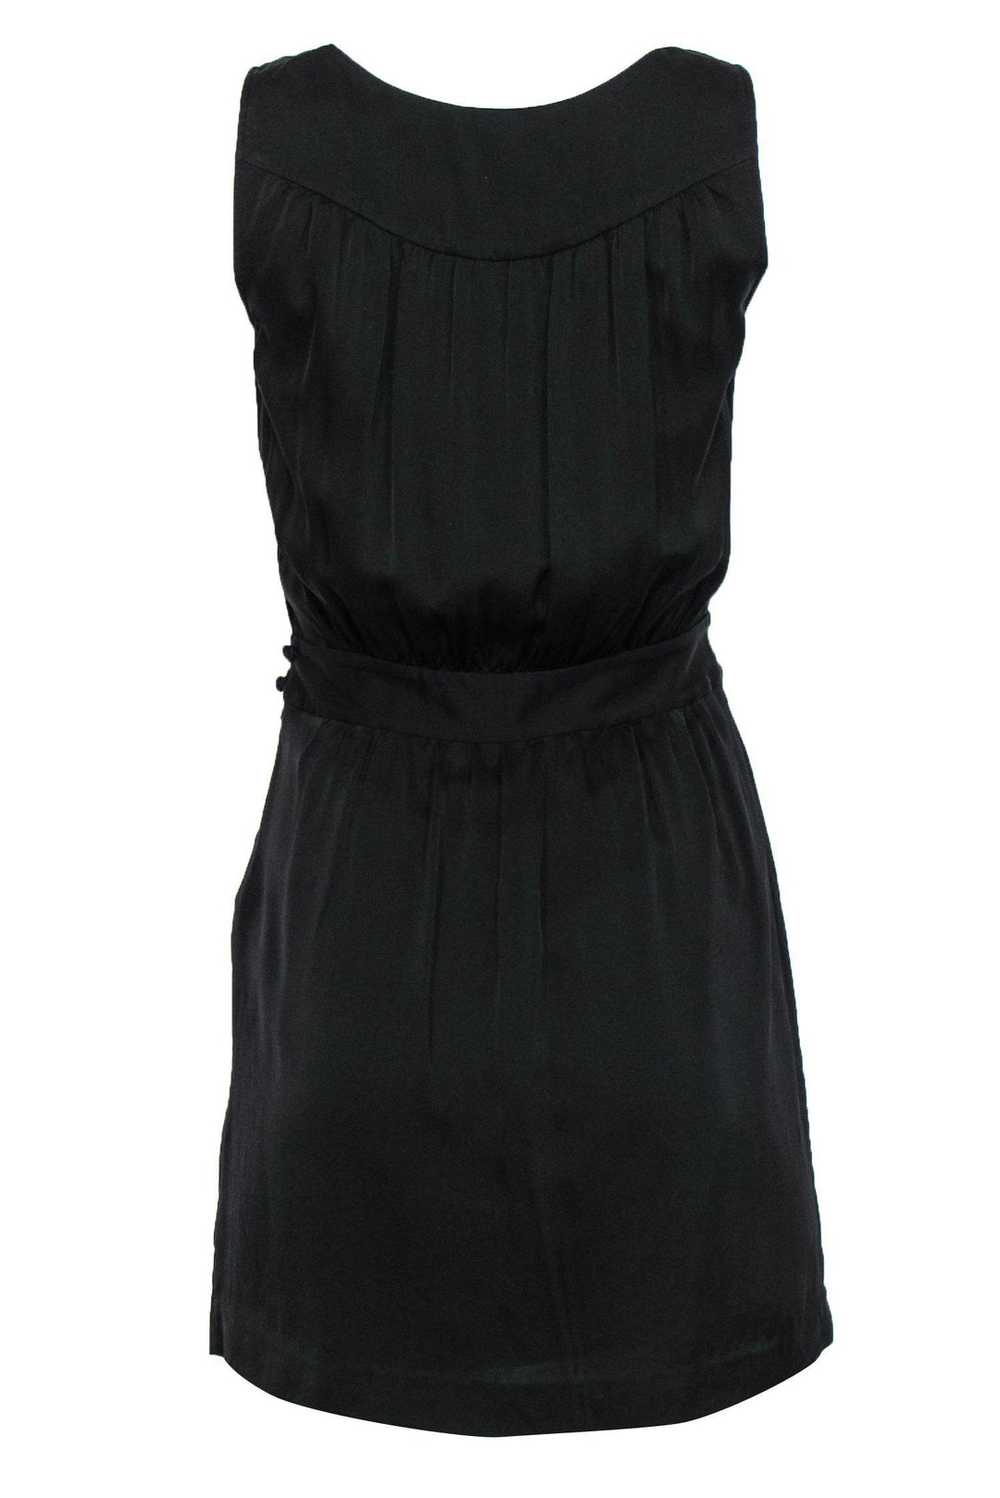 Theory - Black Silk Fitted Mini Dress Sz 0 - image 3